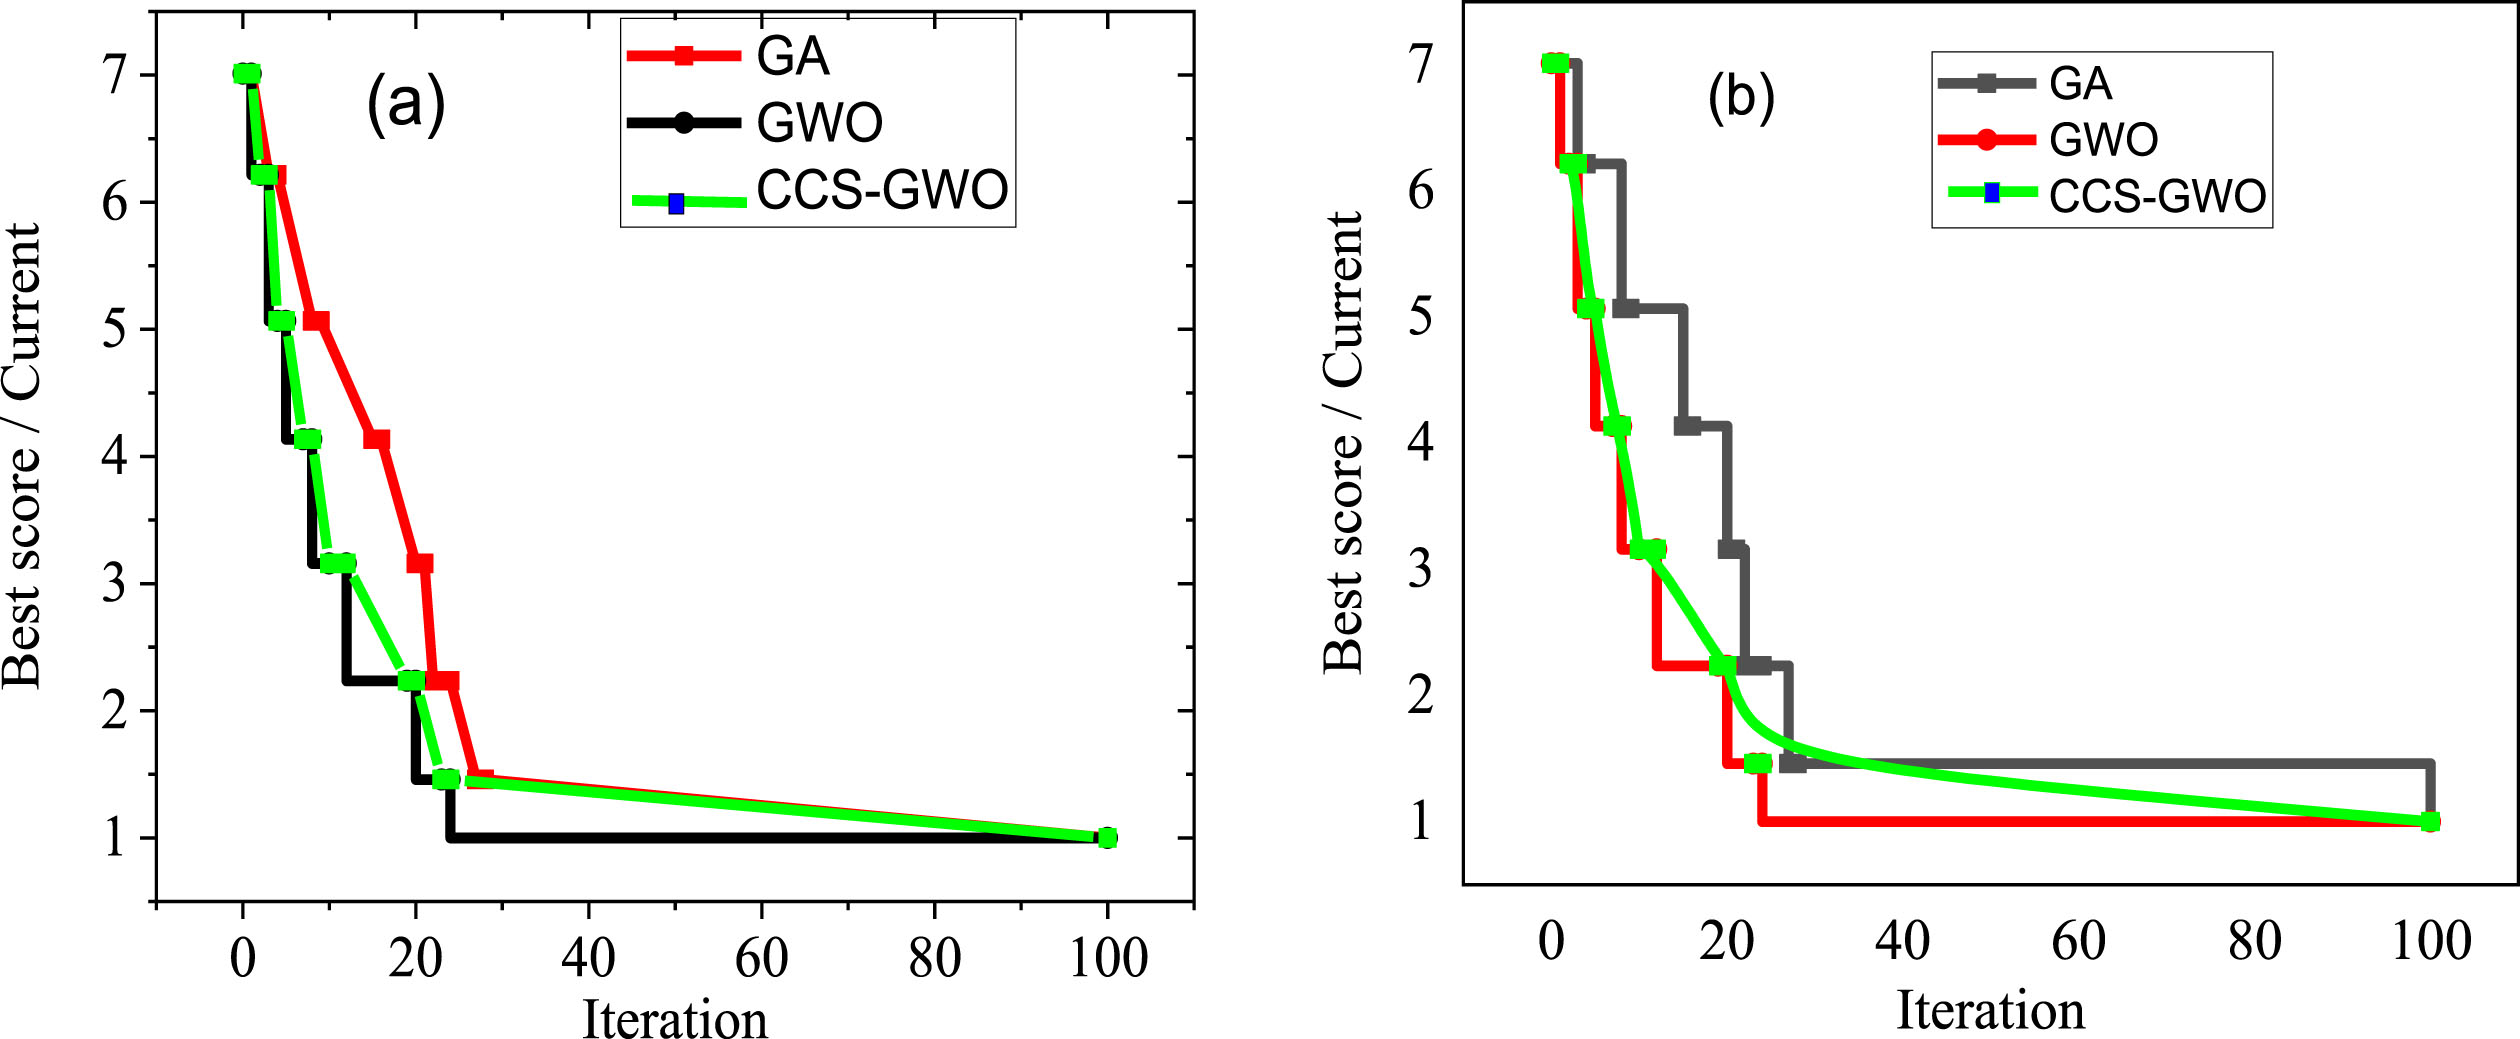 GA, GWO and CCS-GWO curves (a) and CCS-GWO, internal step and external step curves (b).